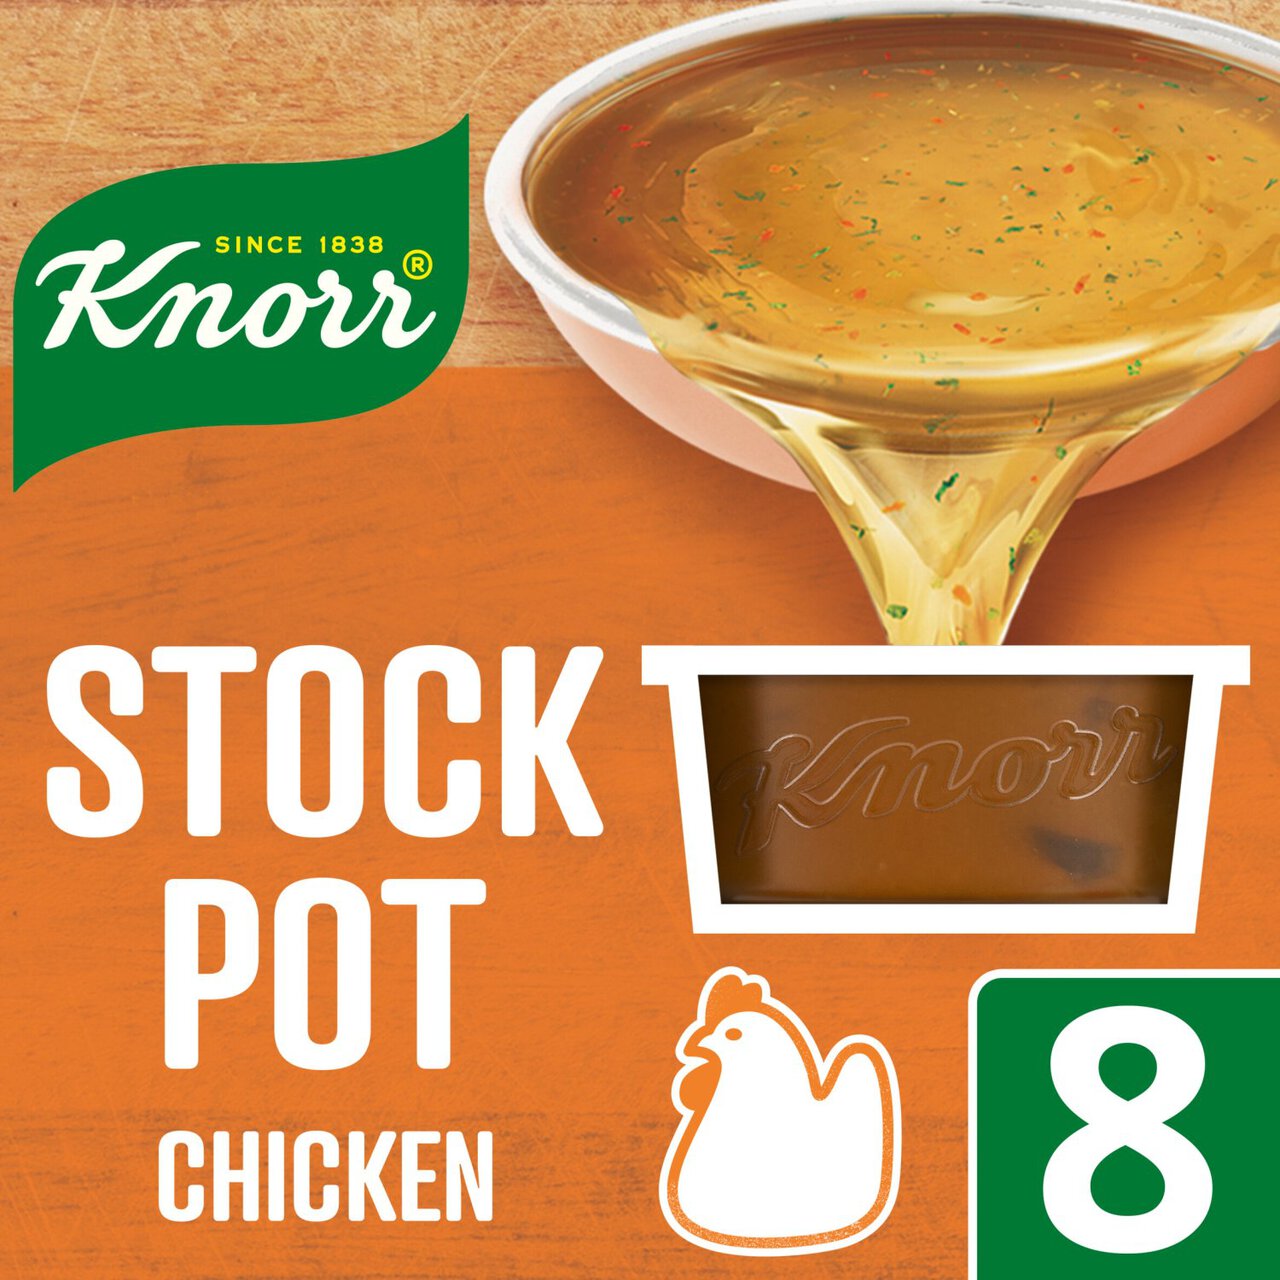 Knorr Chicken Stock Pot 8 x 28g